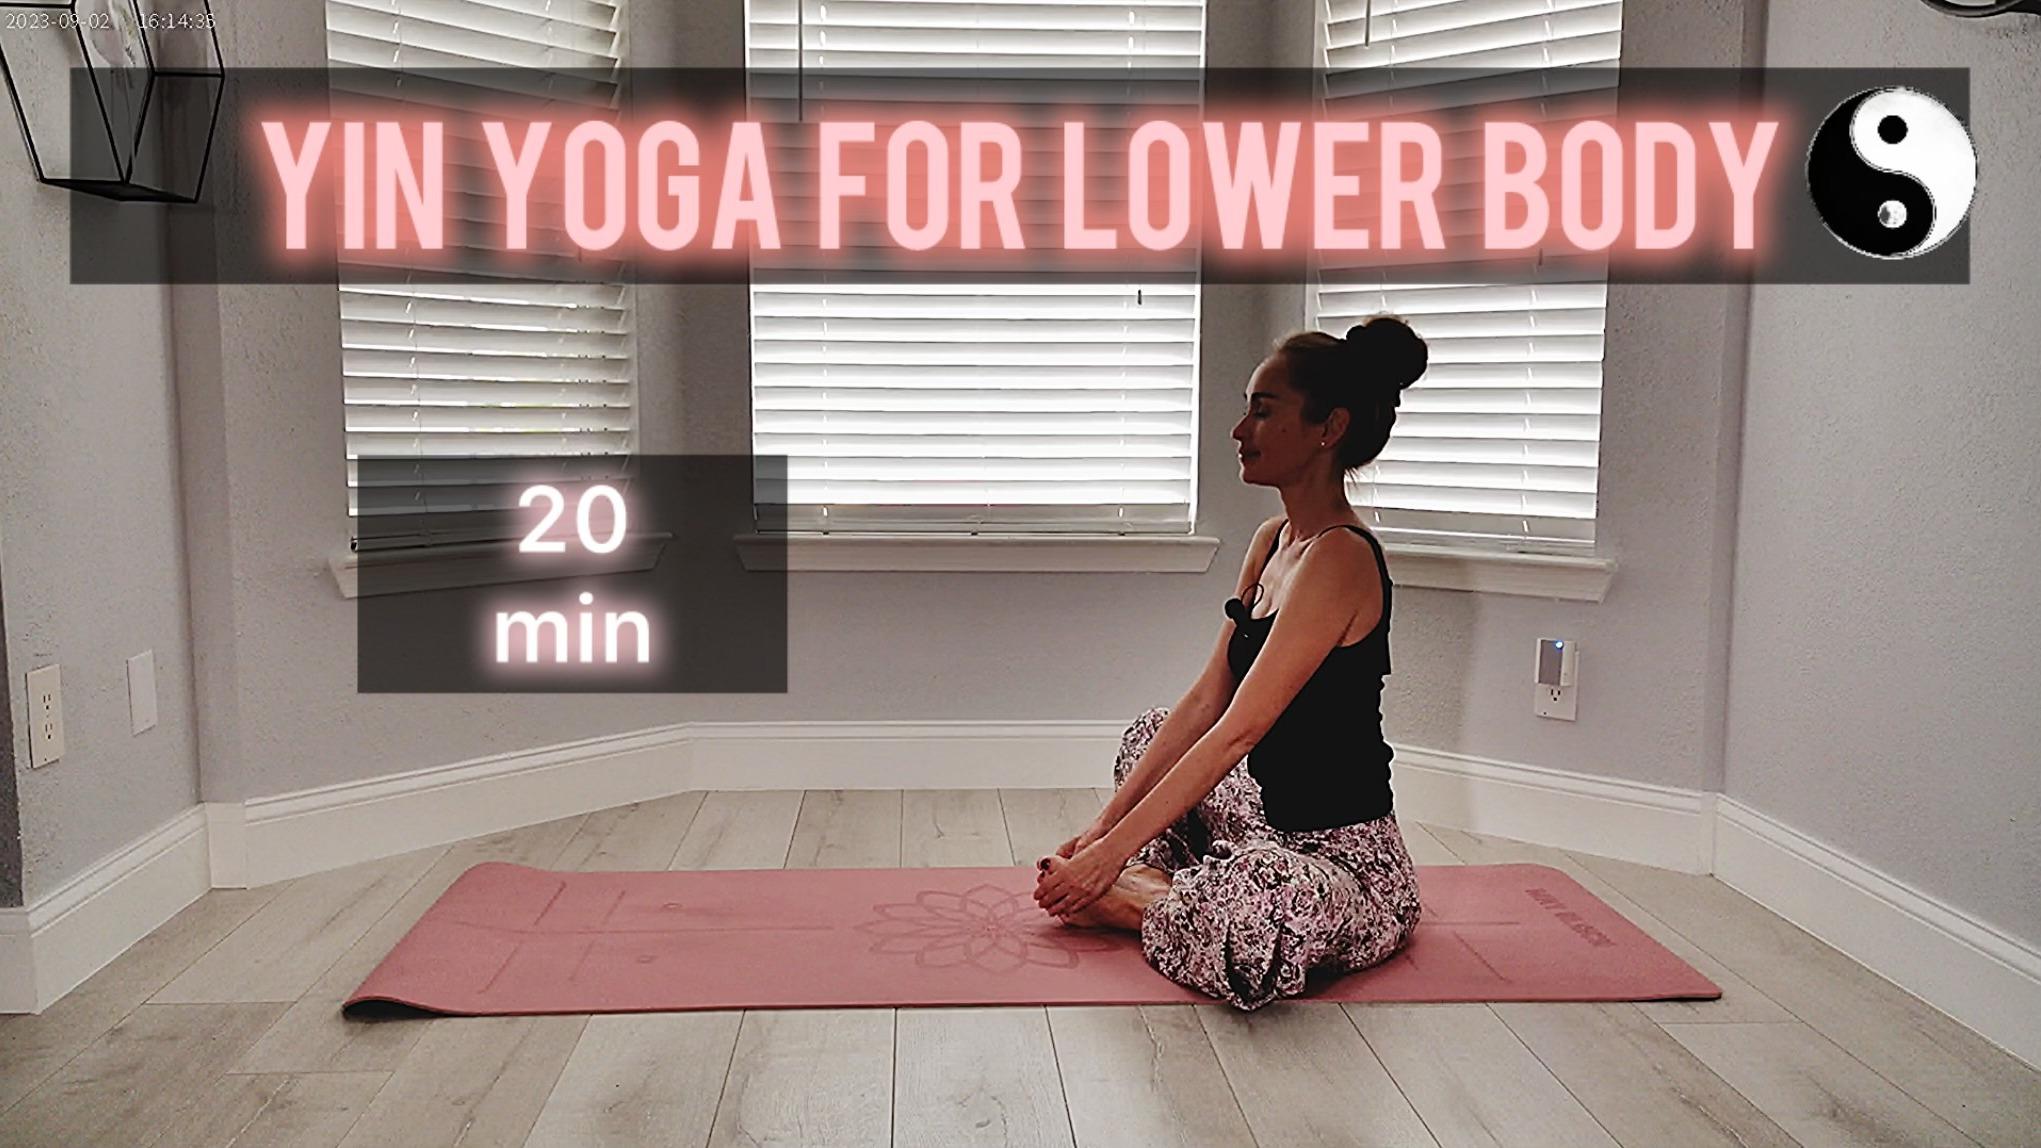 Yin yoga for lower body